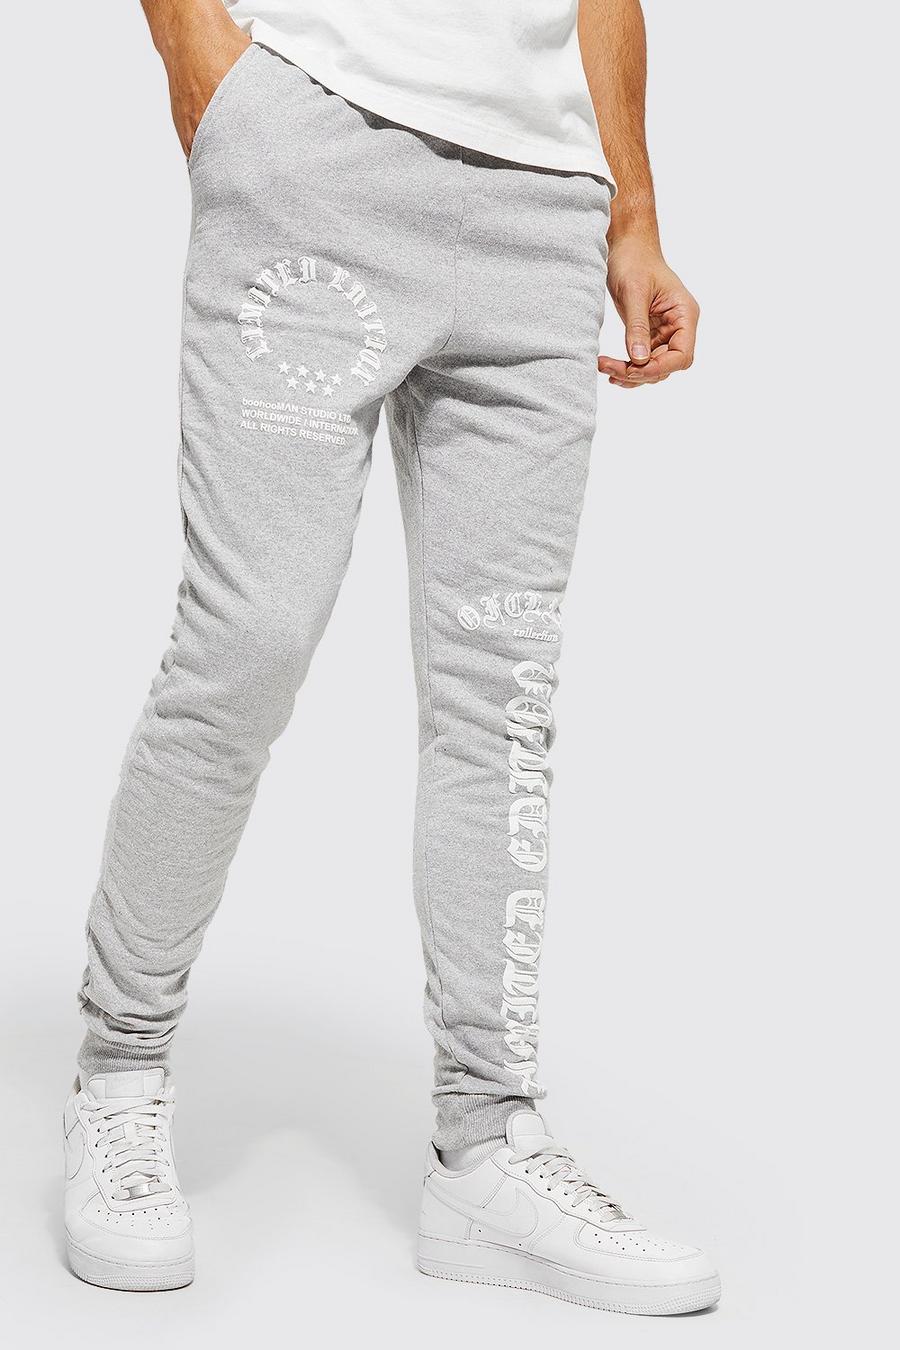 Pantaloni tuta Tall Limited Edition con stampa, Grey marl grigio image number 1